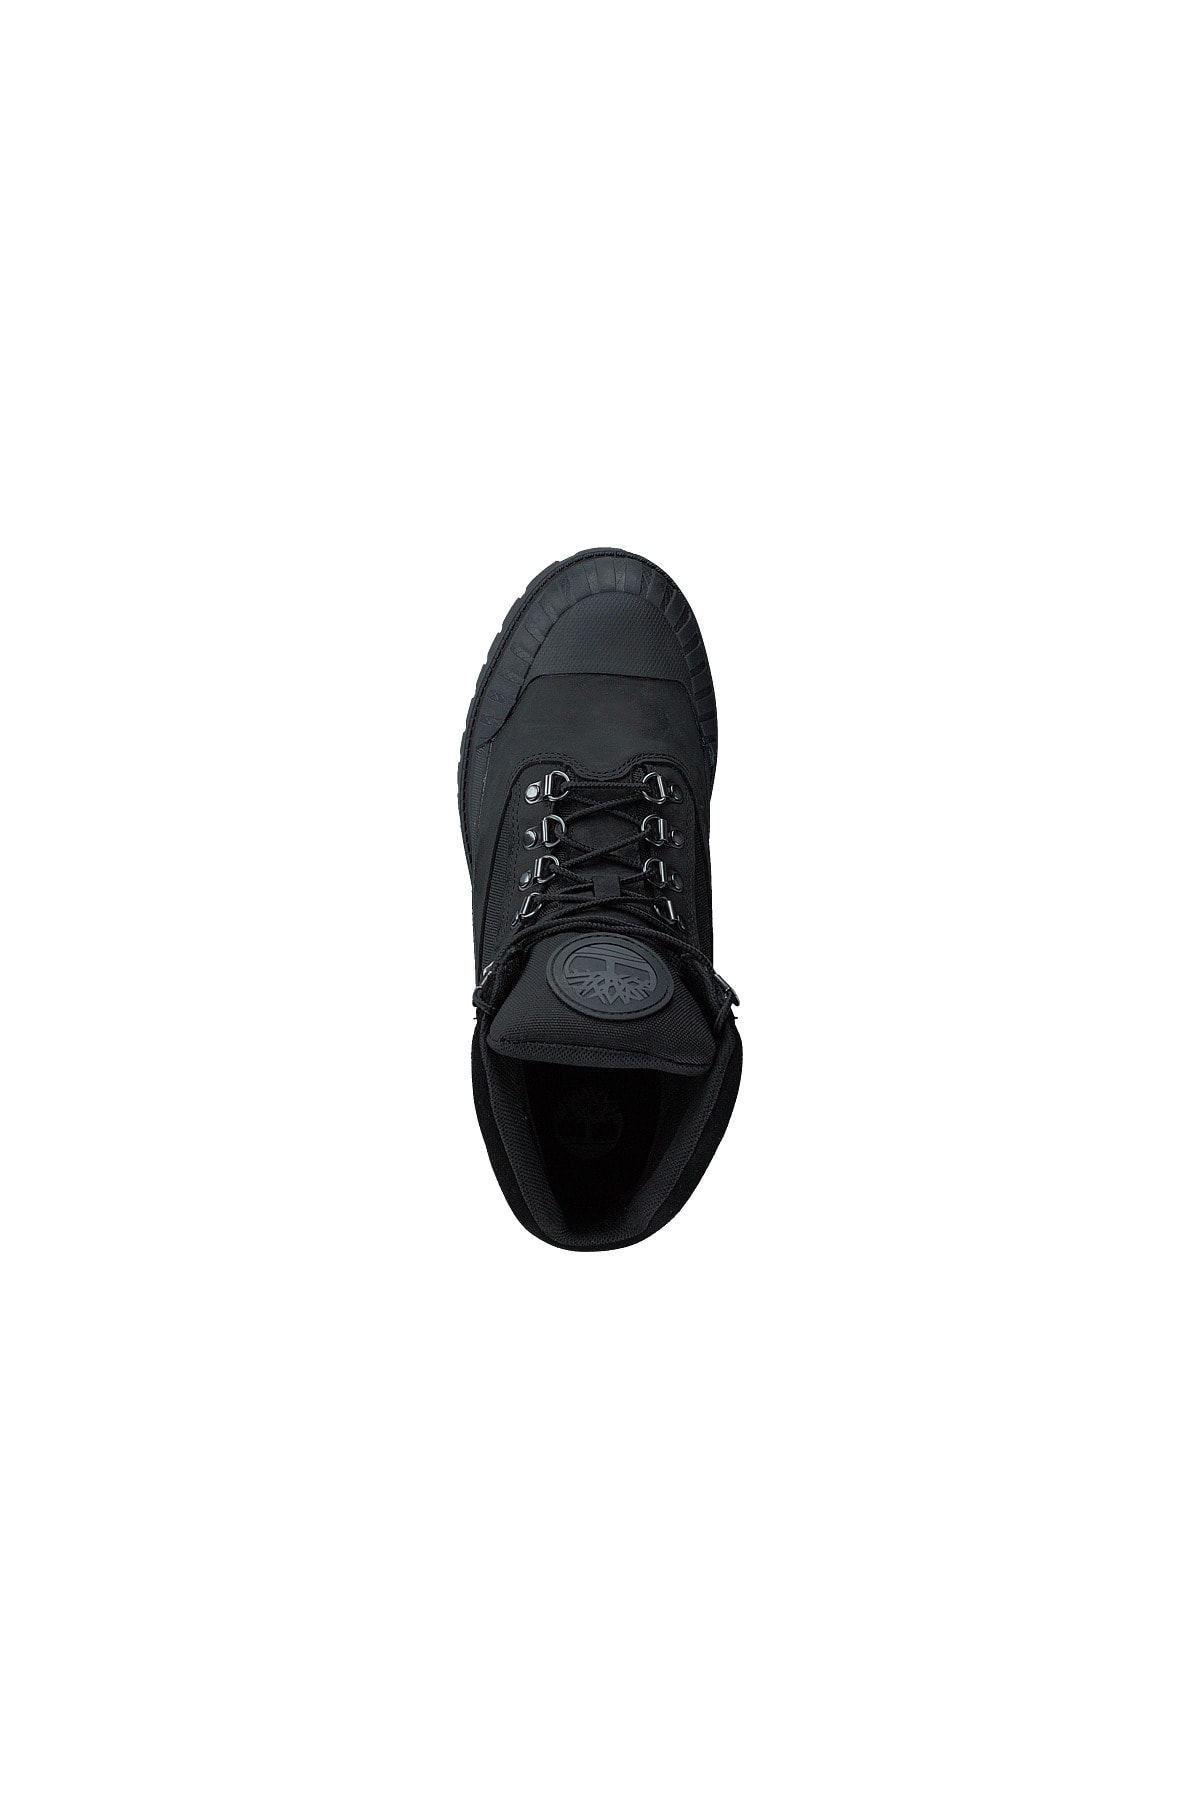 Timberland کفش بیرونی مشکی مردانه Hrtg Rubber Toe Hiker Wp TB0A2QQ70011